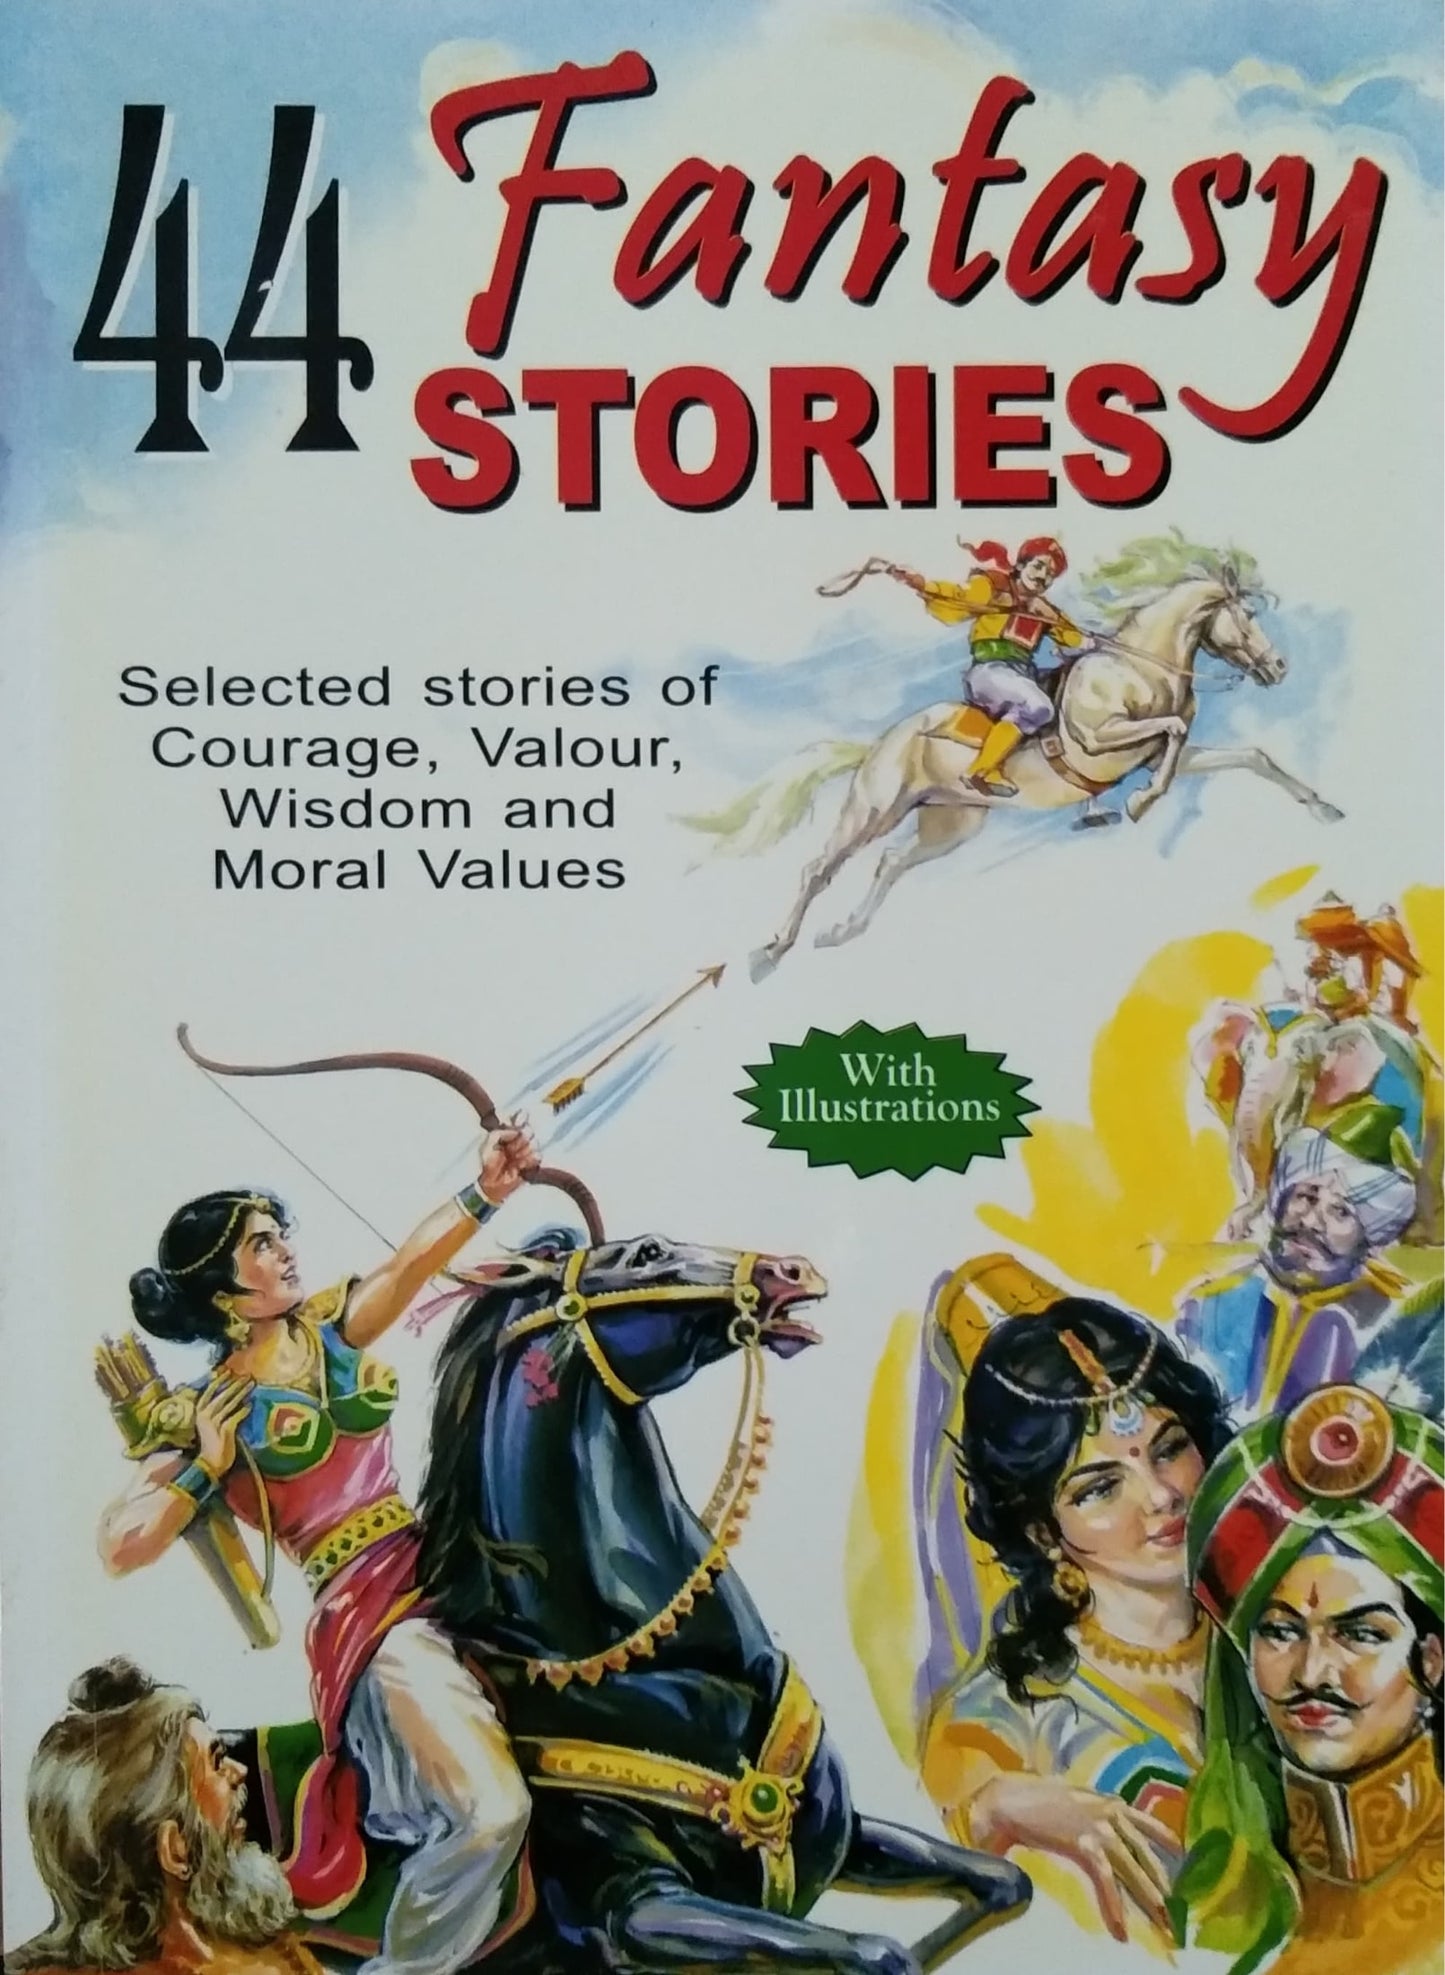 44 Fantasy STORIES